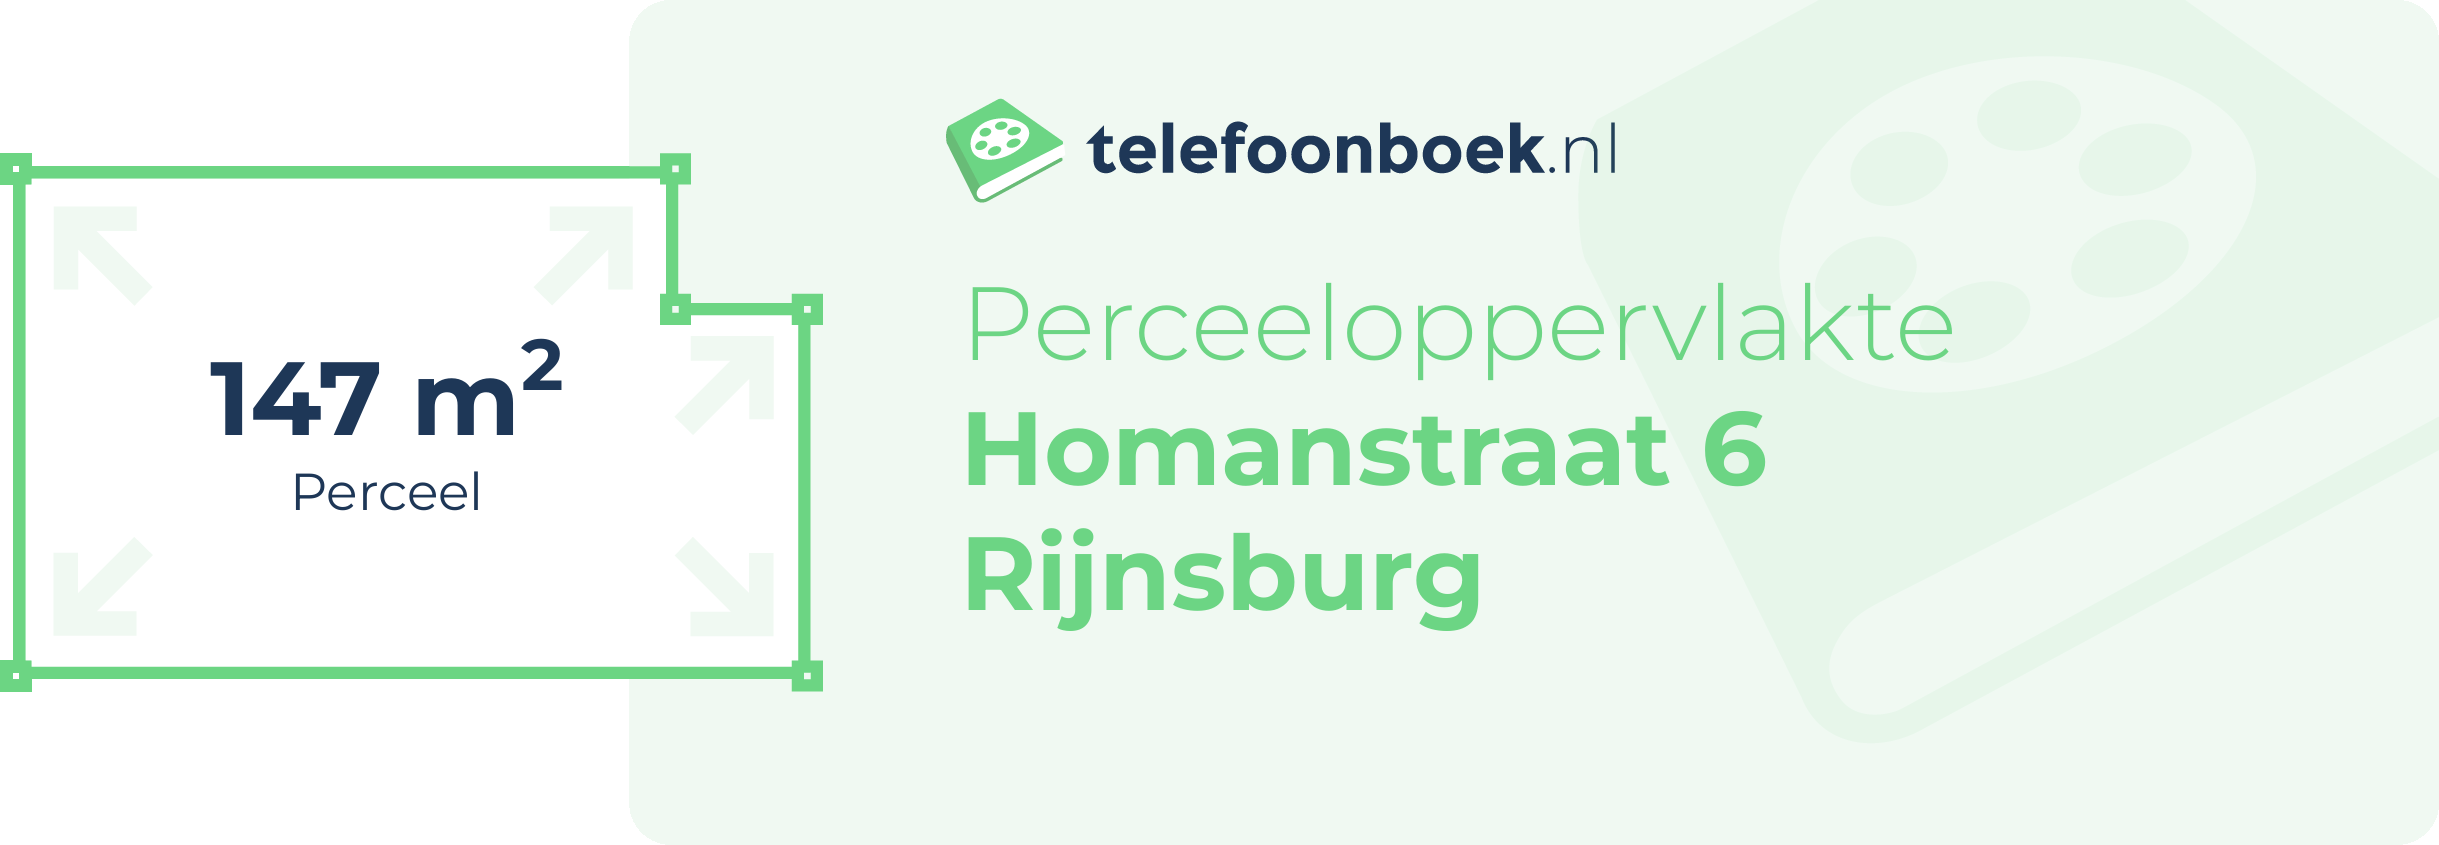 Perceeloppervlakte Homanstraat 6 Rijnsburg